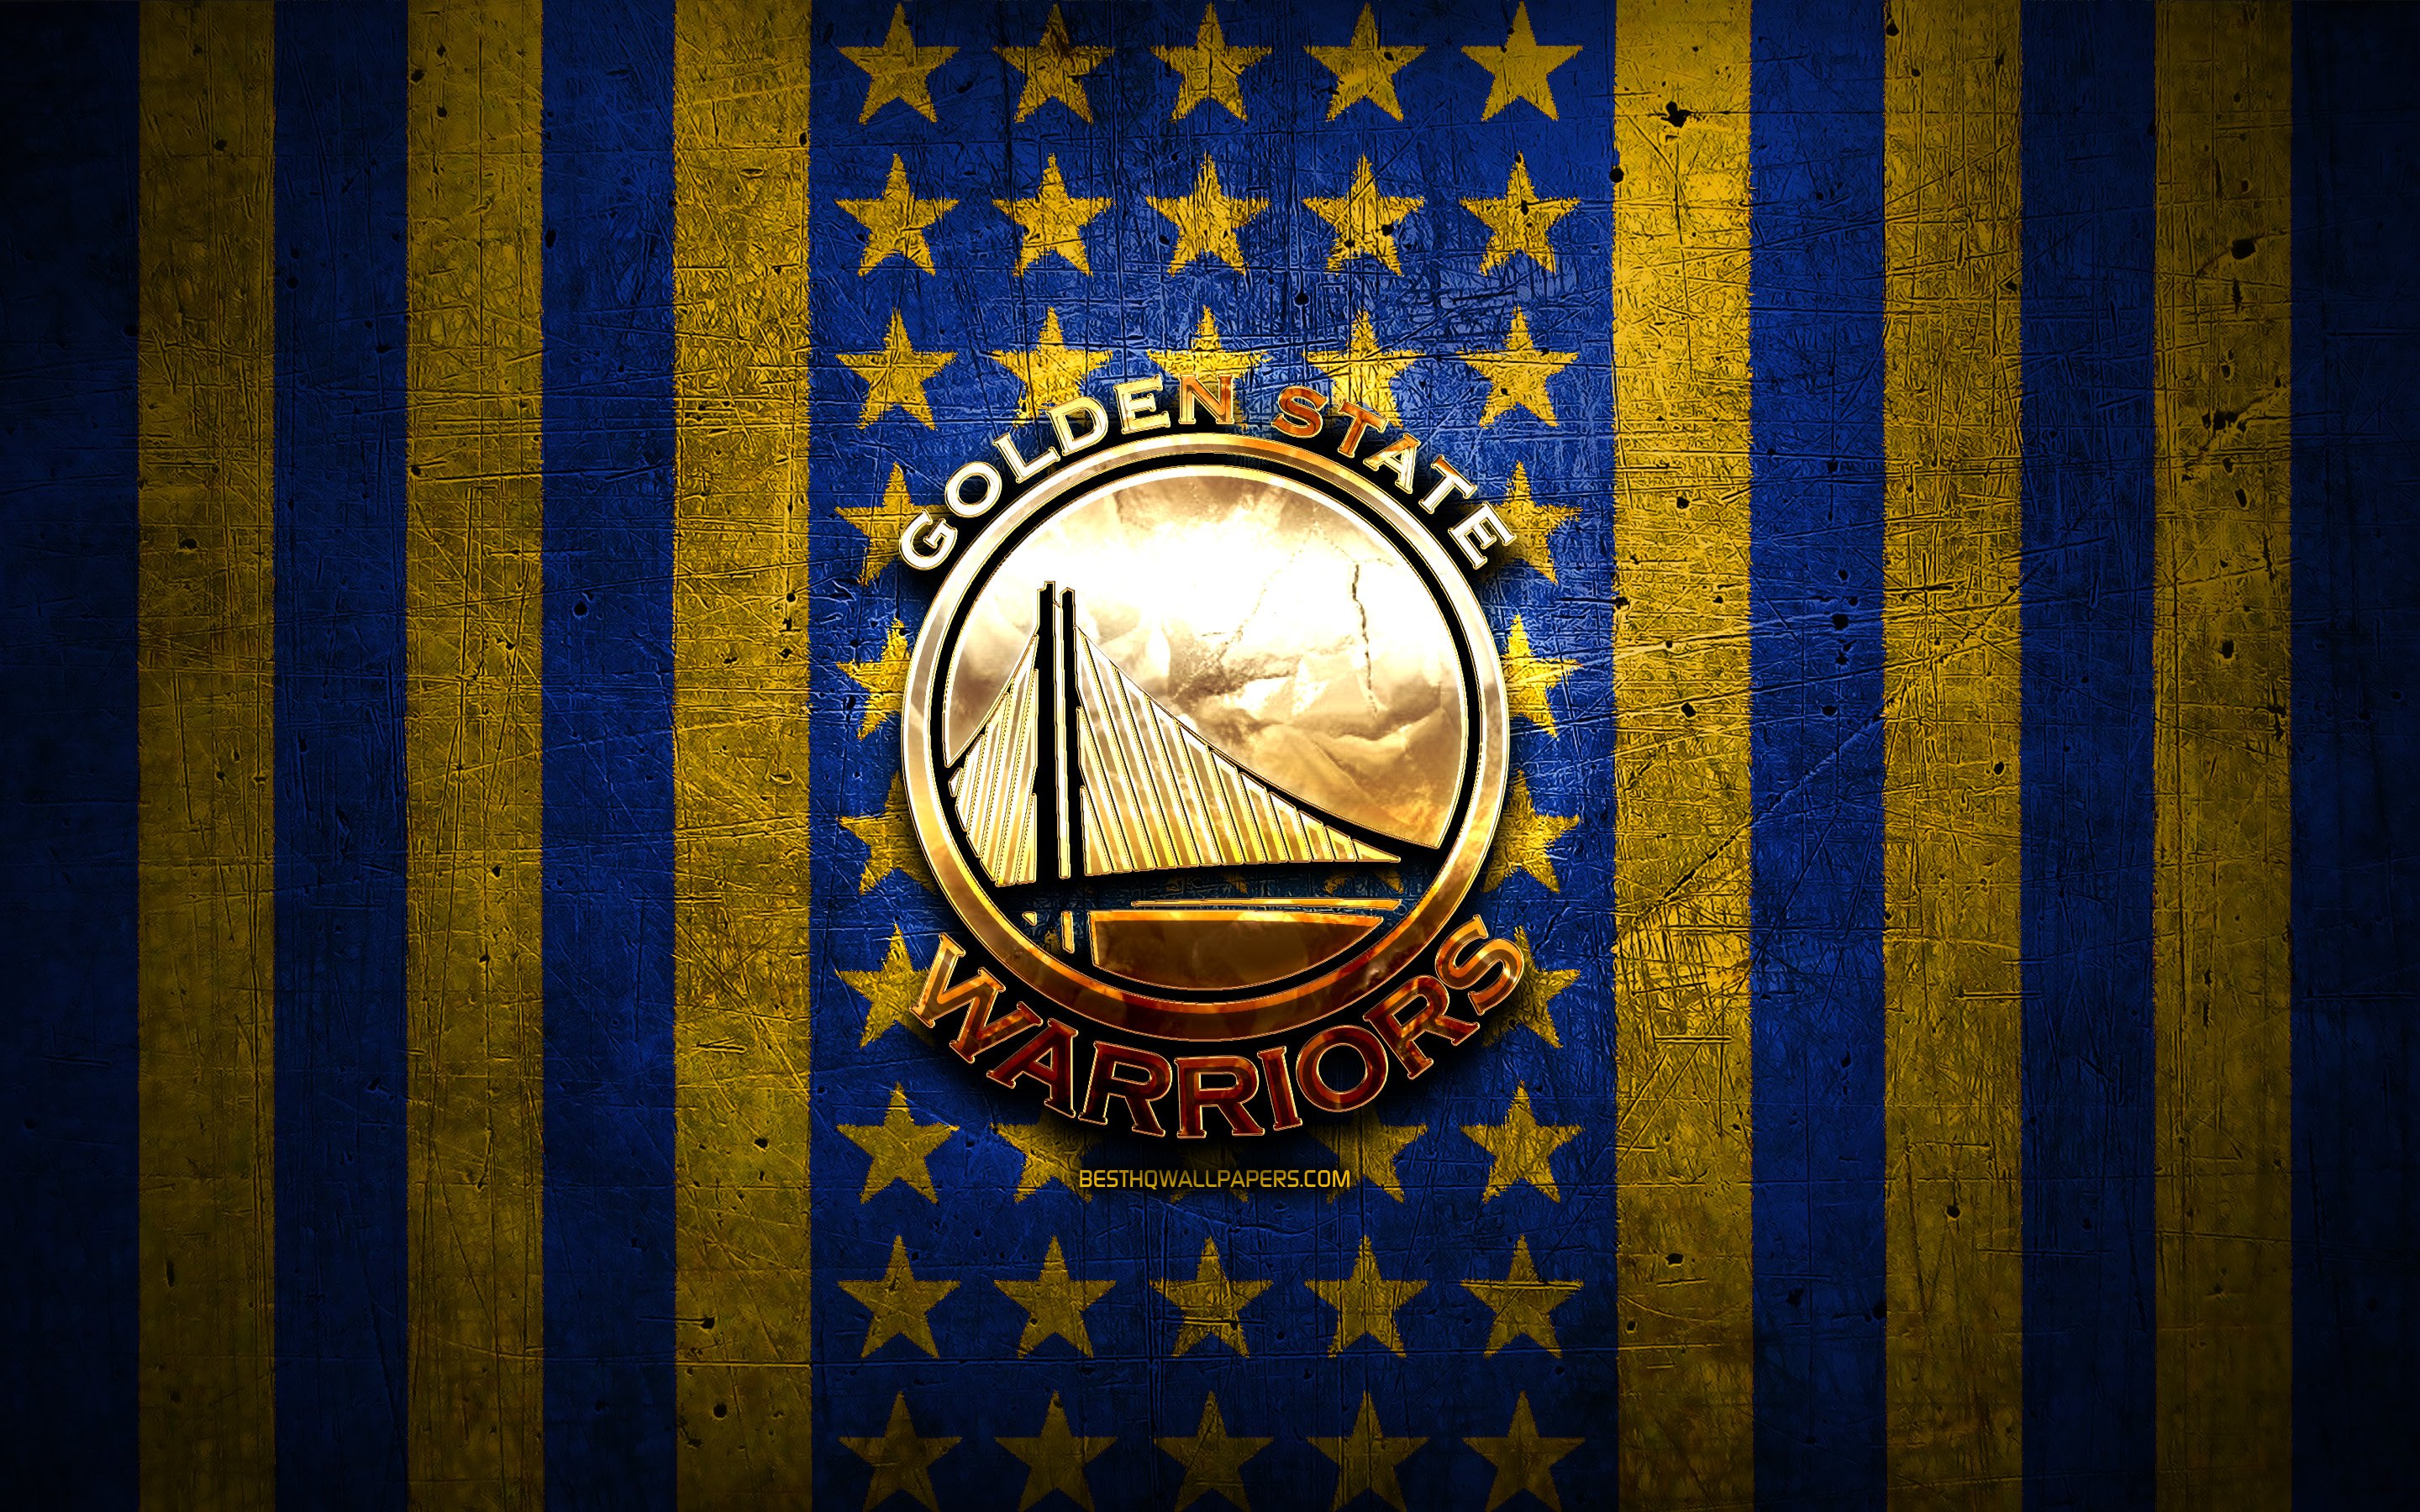 Golden State Warriors Logo Wallpaper 80 images